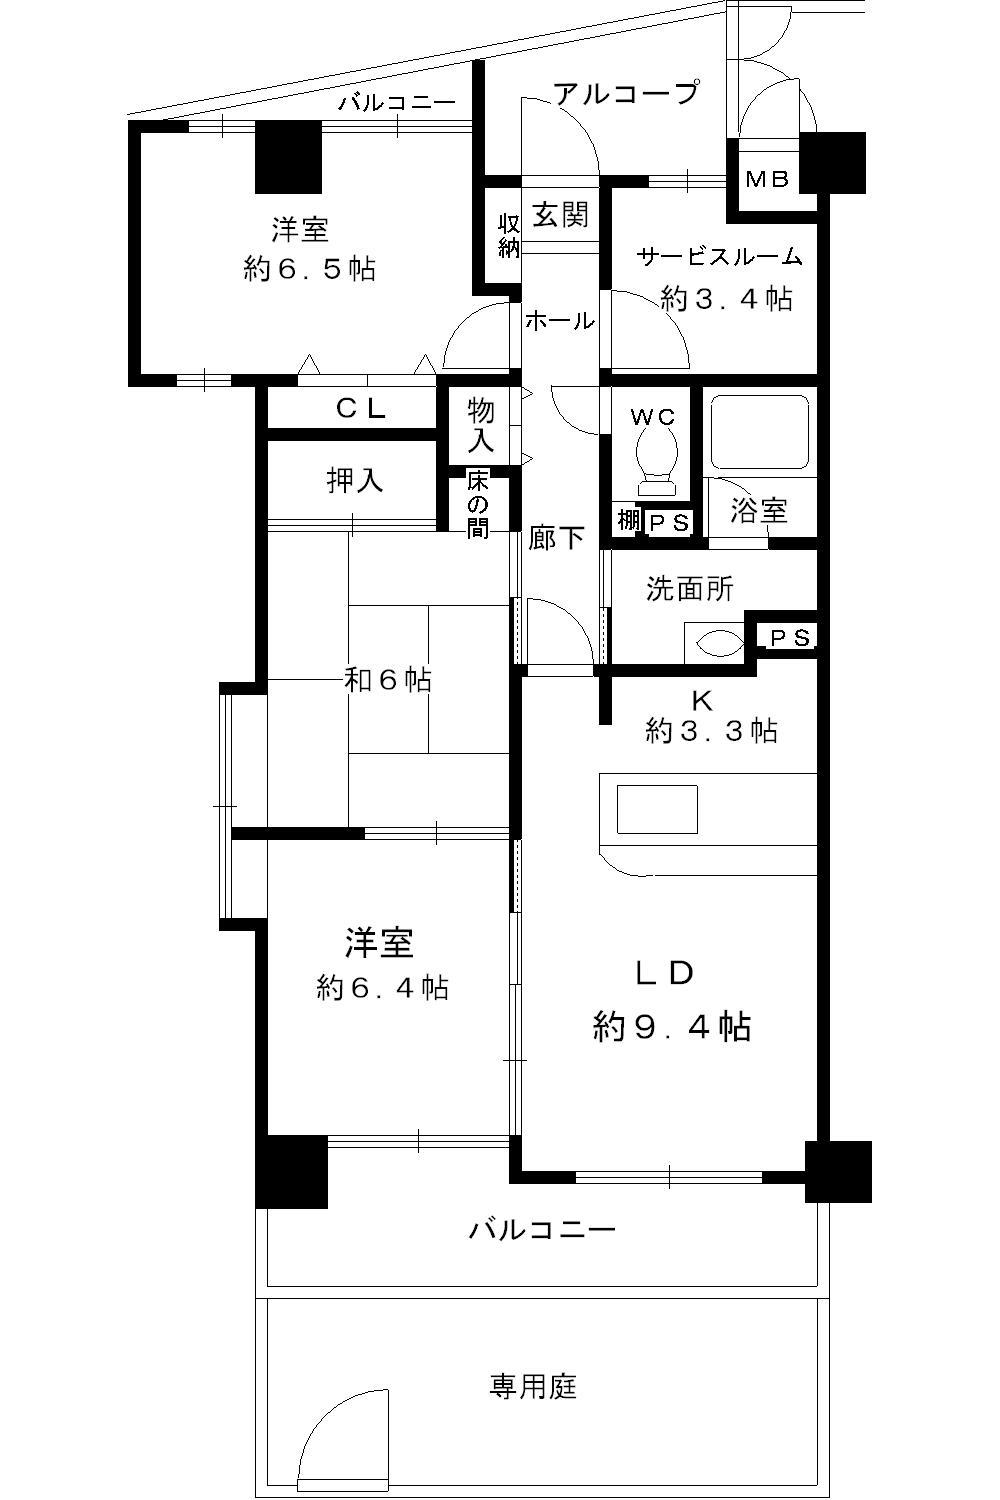 Floor plan. 3LDK + S (storeroom), Price 14,980,000 yen, Occupied area 77.13 sq m , Balcony area 11.05 sq m